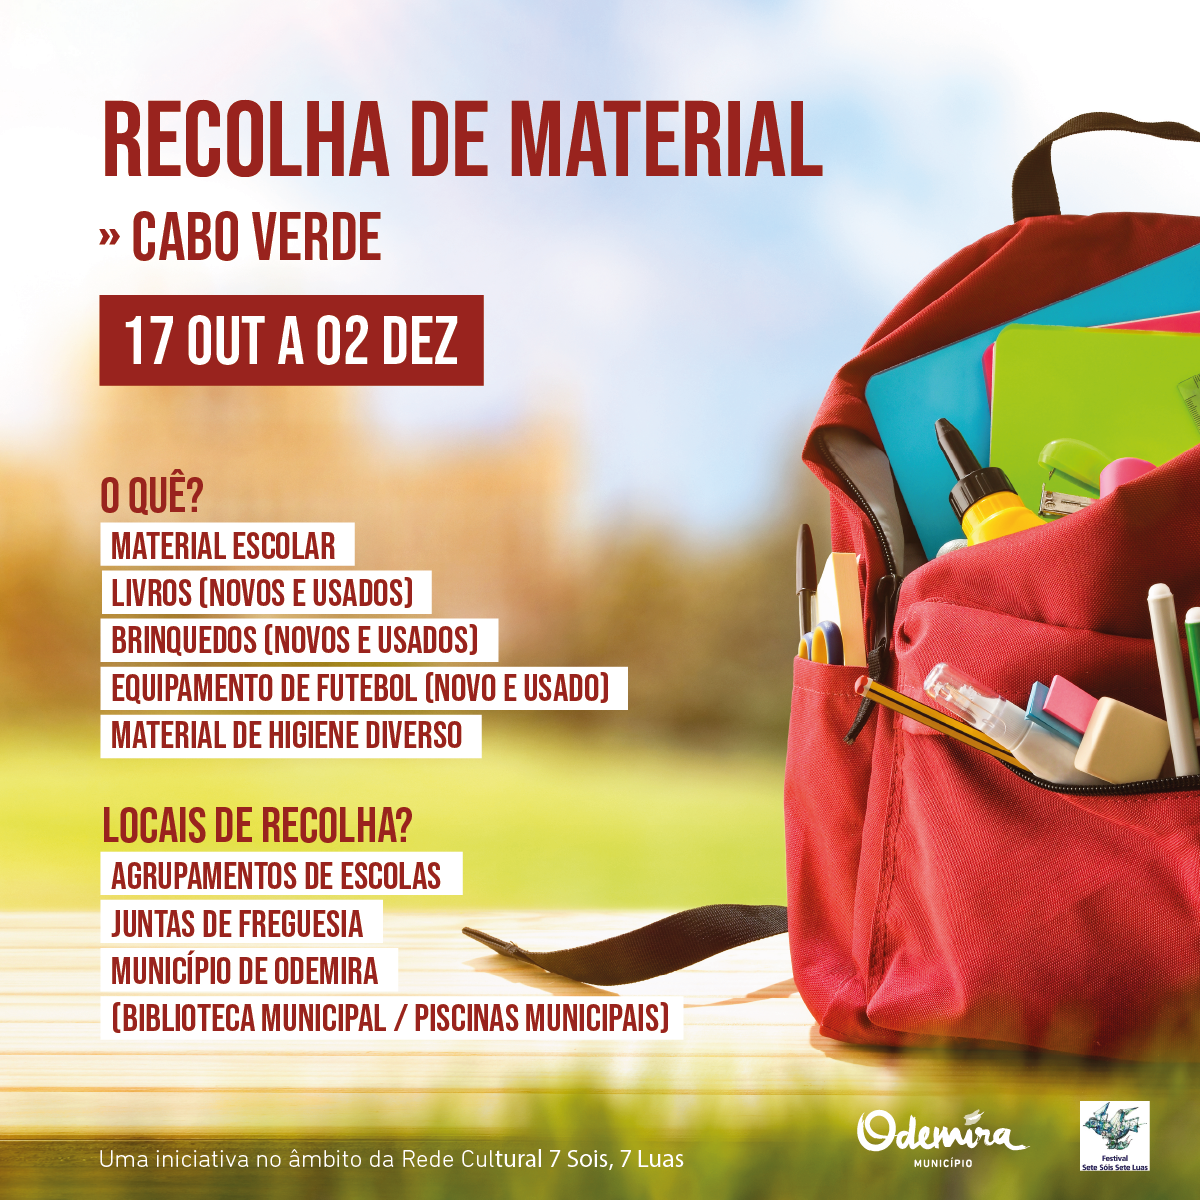 Odemira promove campanha de recolha de bens para Cabo Verde